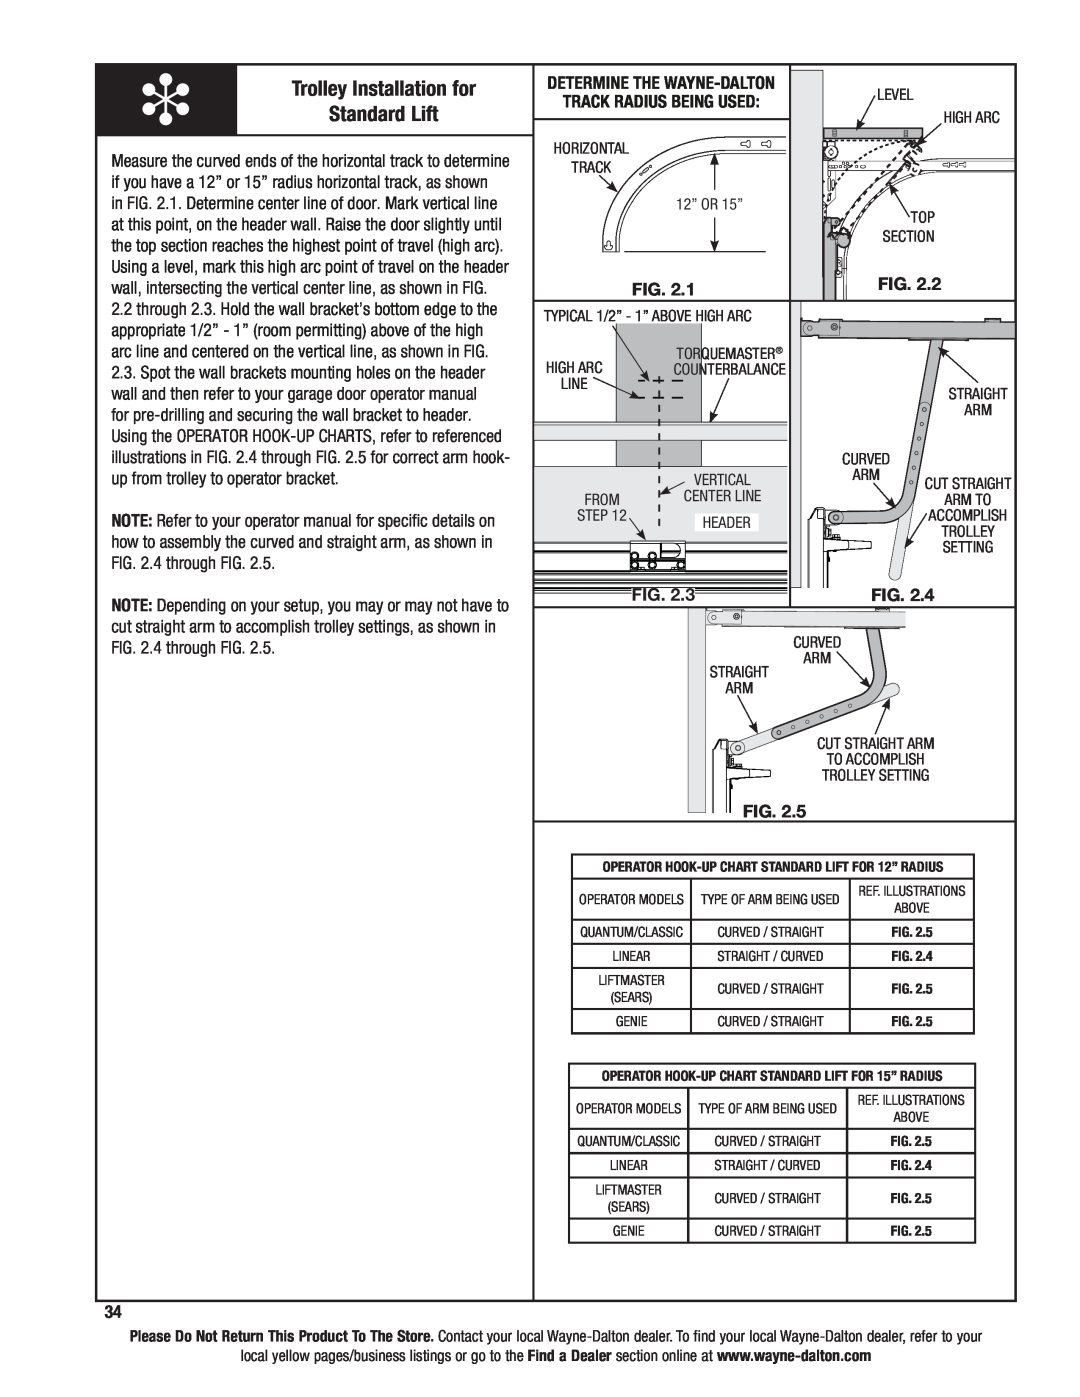 Wayne-Dalton 9100, 9400, 9600 installation instructions Trolley Installation for Standard Lift 